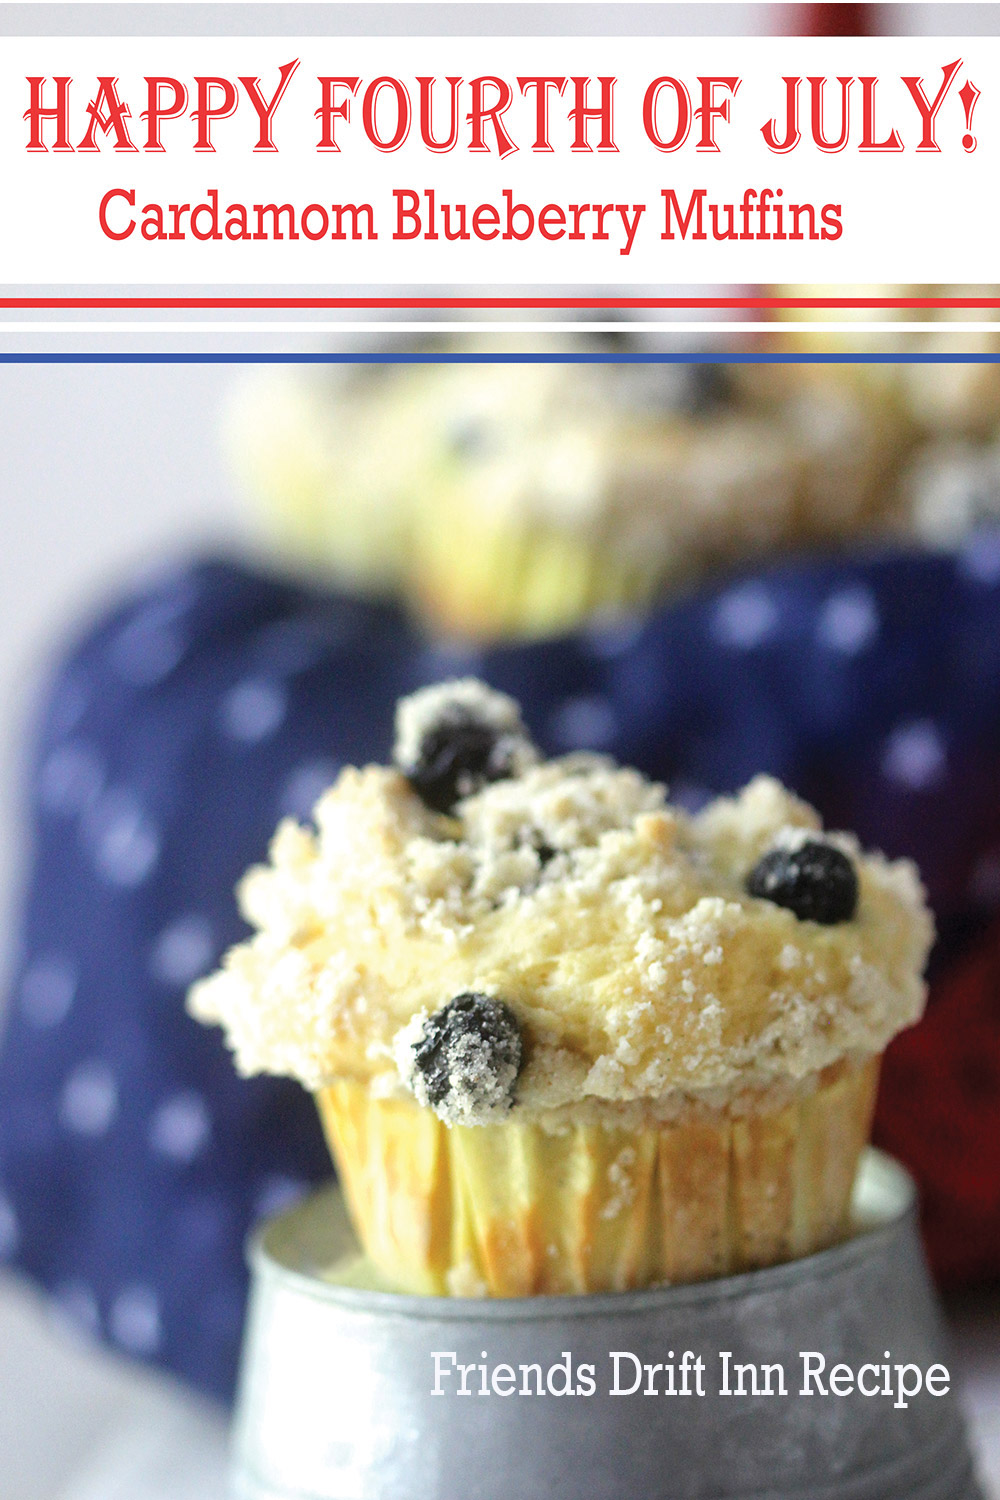 Happy Fourth of July Cardamom Blueberry Muffins Recipe